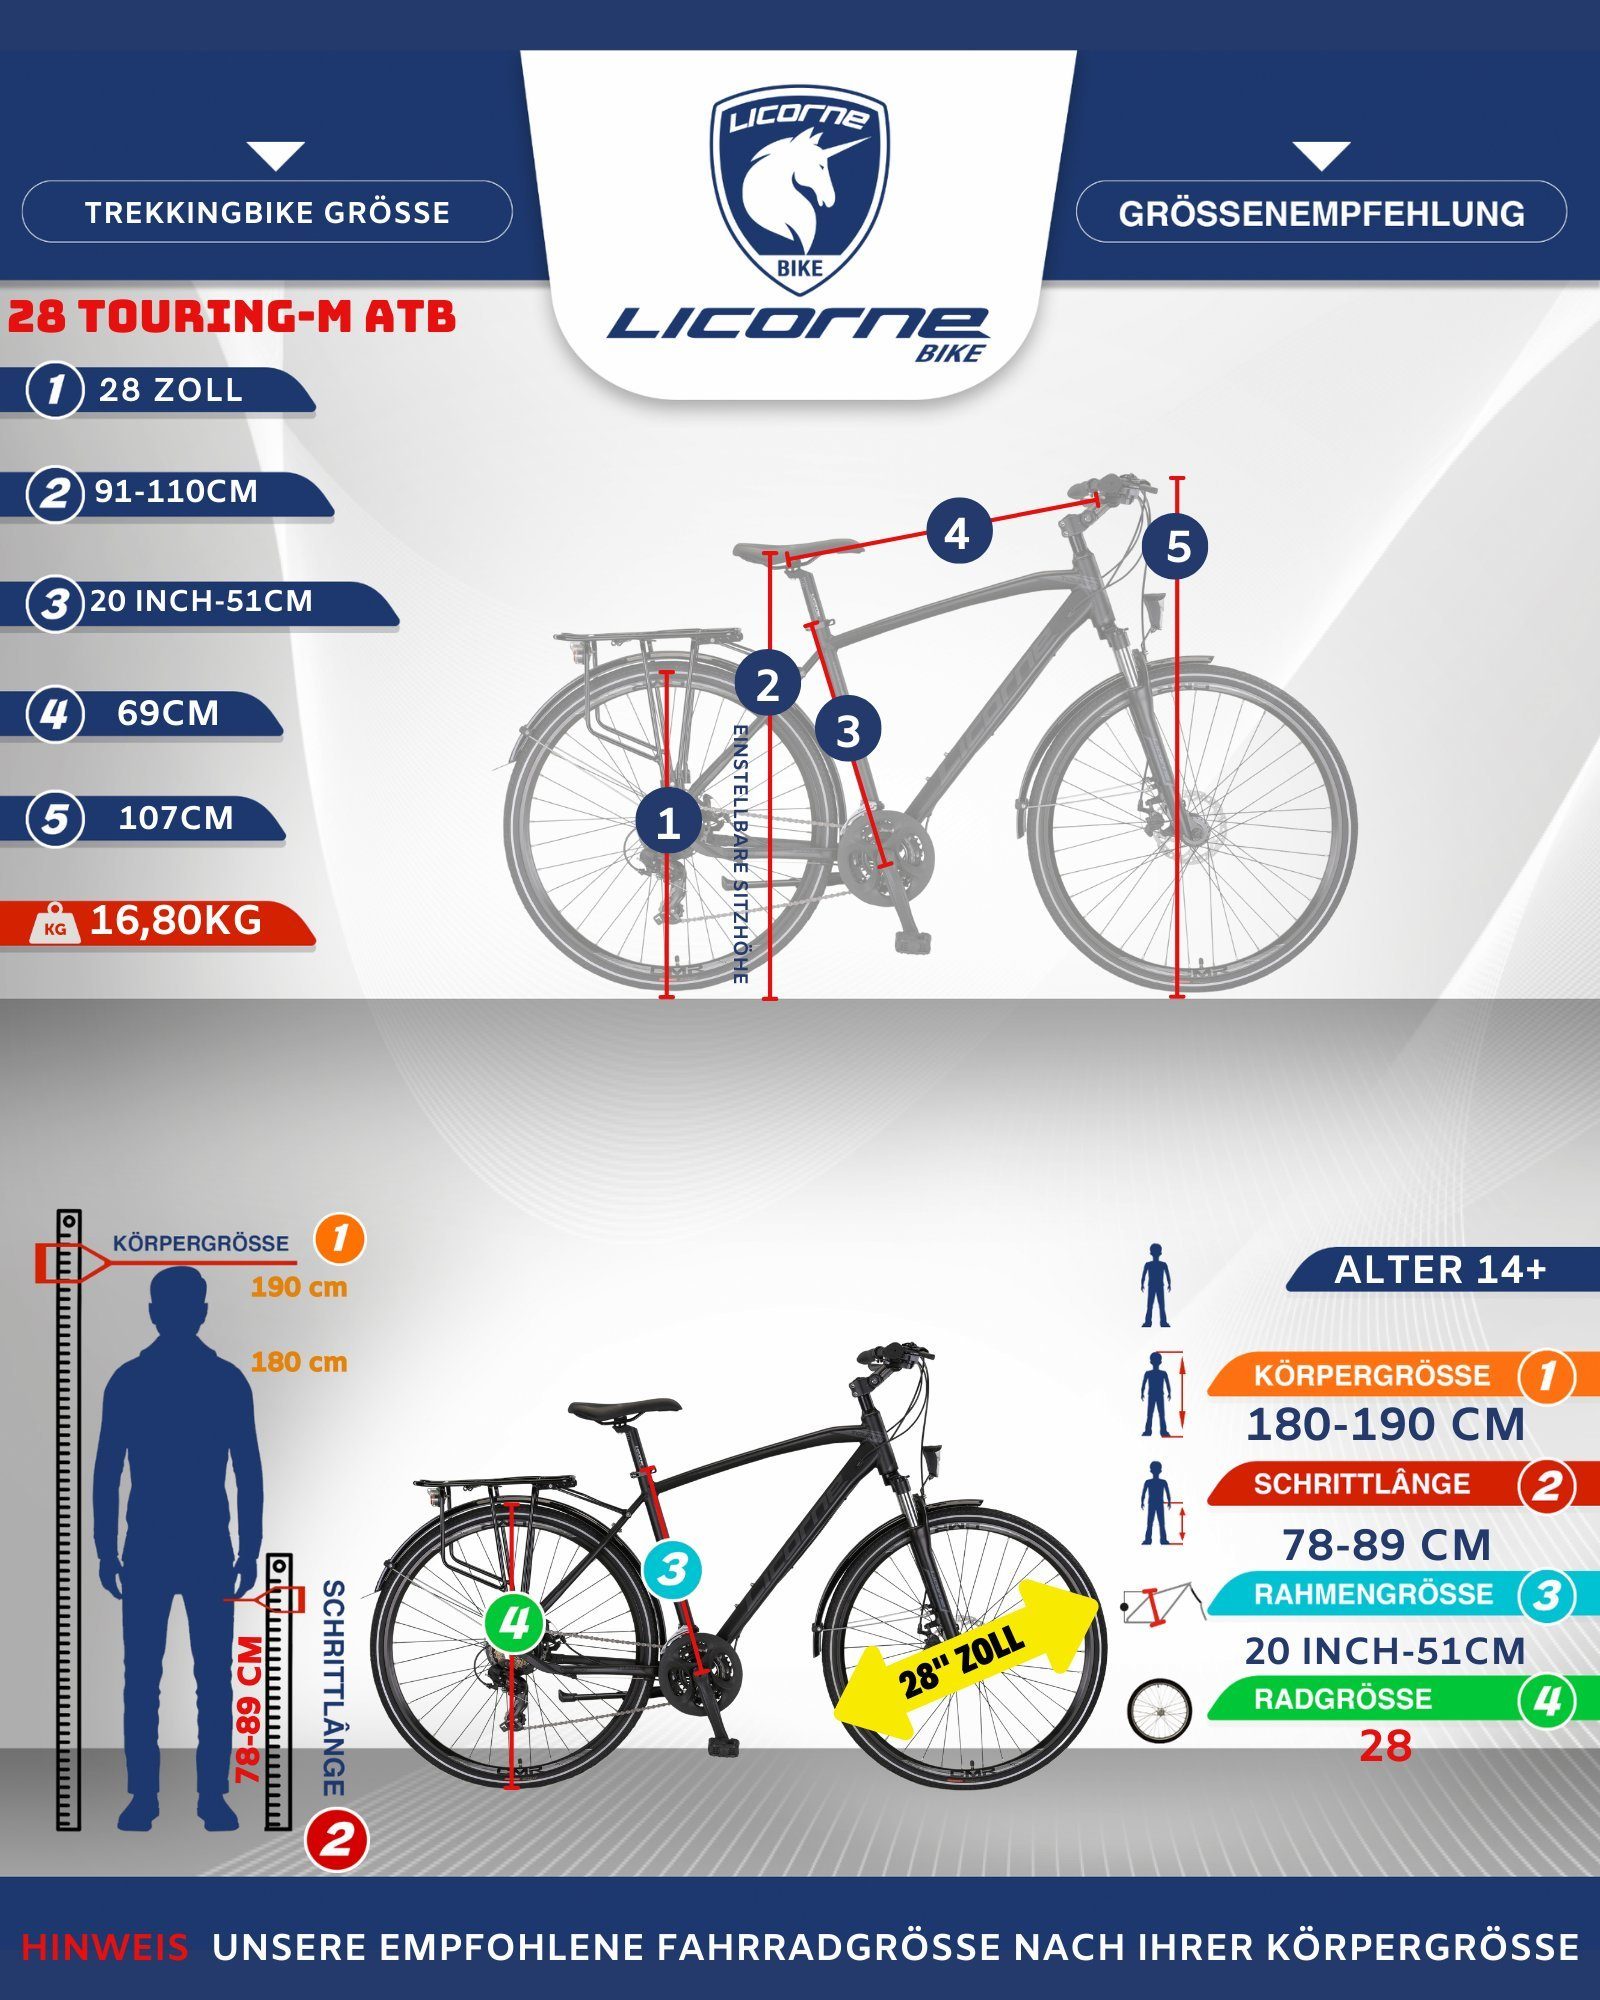 Licorne Bike Bike Premium Schwarz 21 Zoll, Trekking Trekkingrad Licorne Gang in Bike 28 Touring